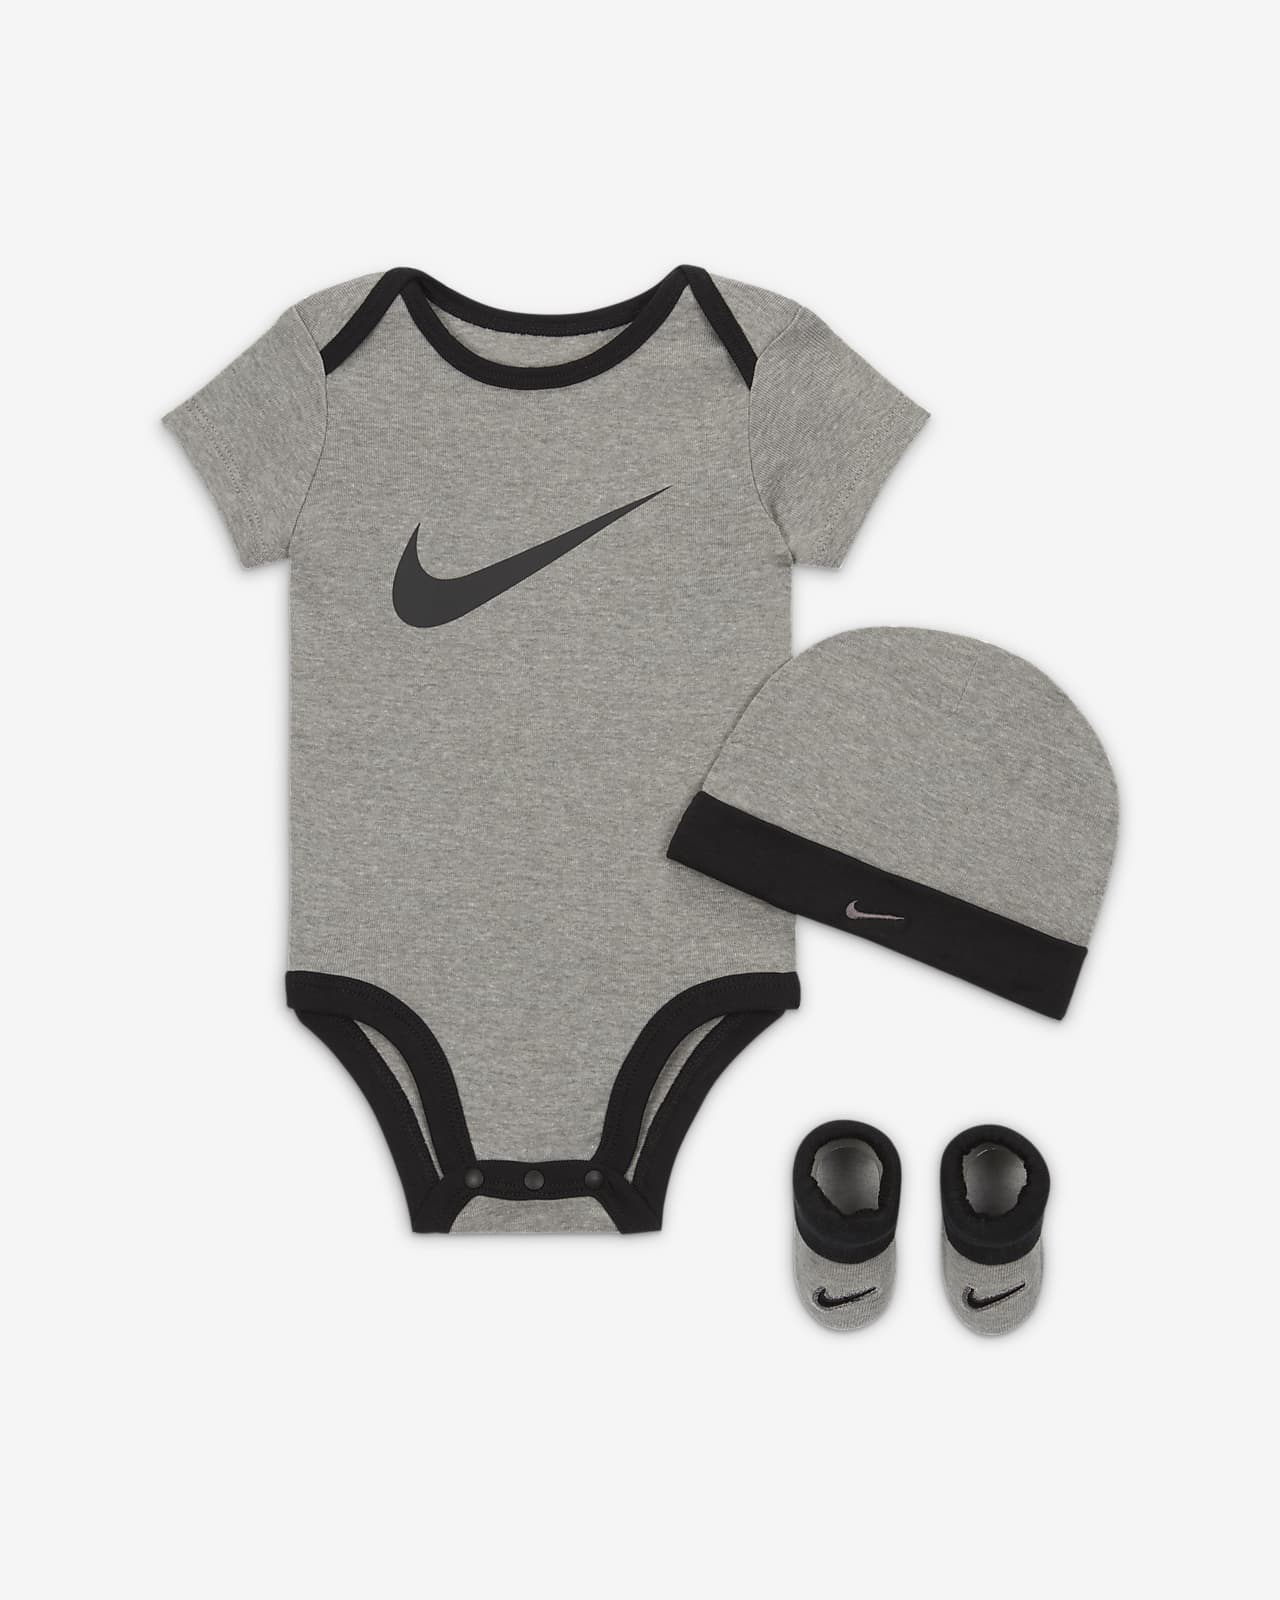 Baby (0-6M) Bodysuit, Hat and Booties Set.